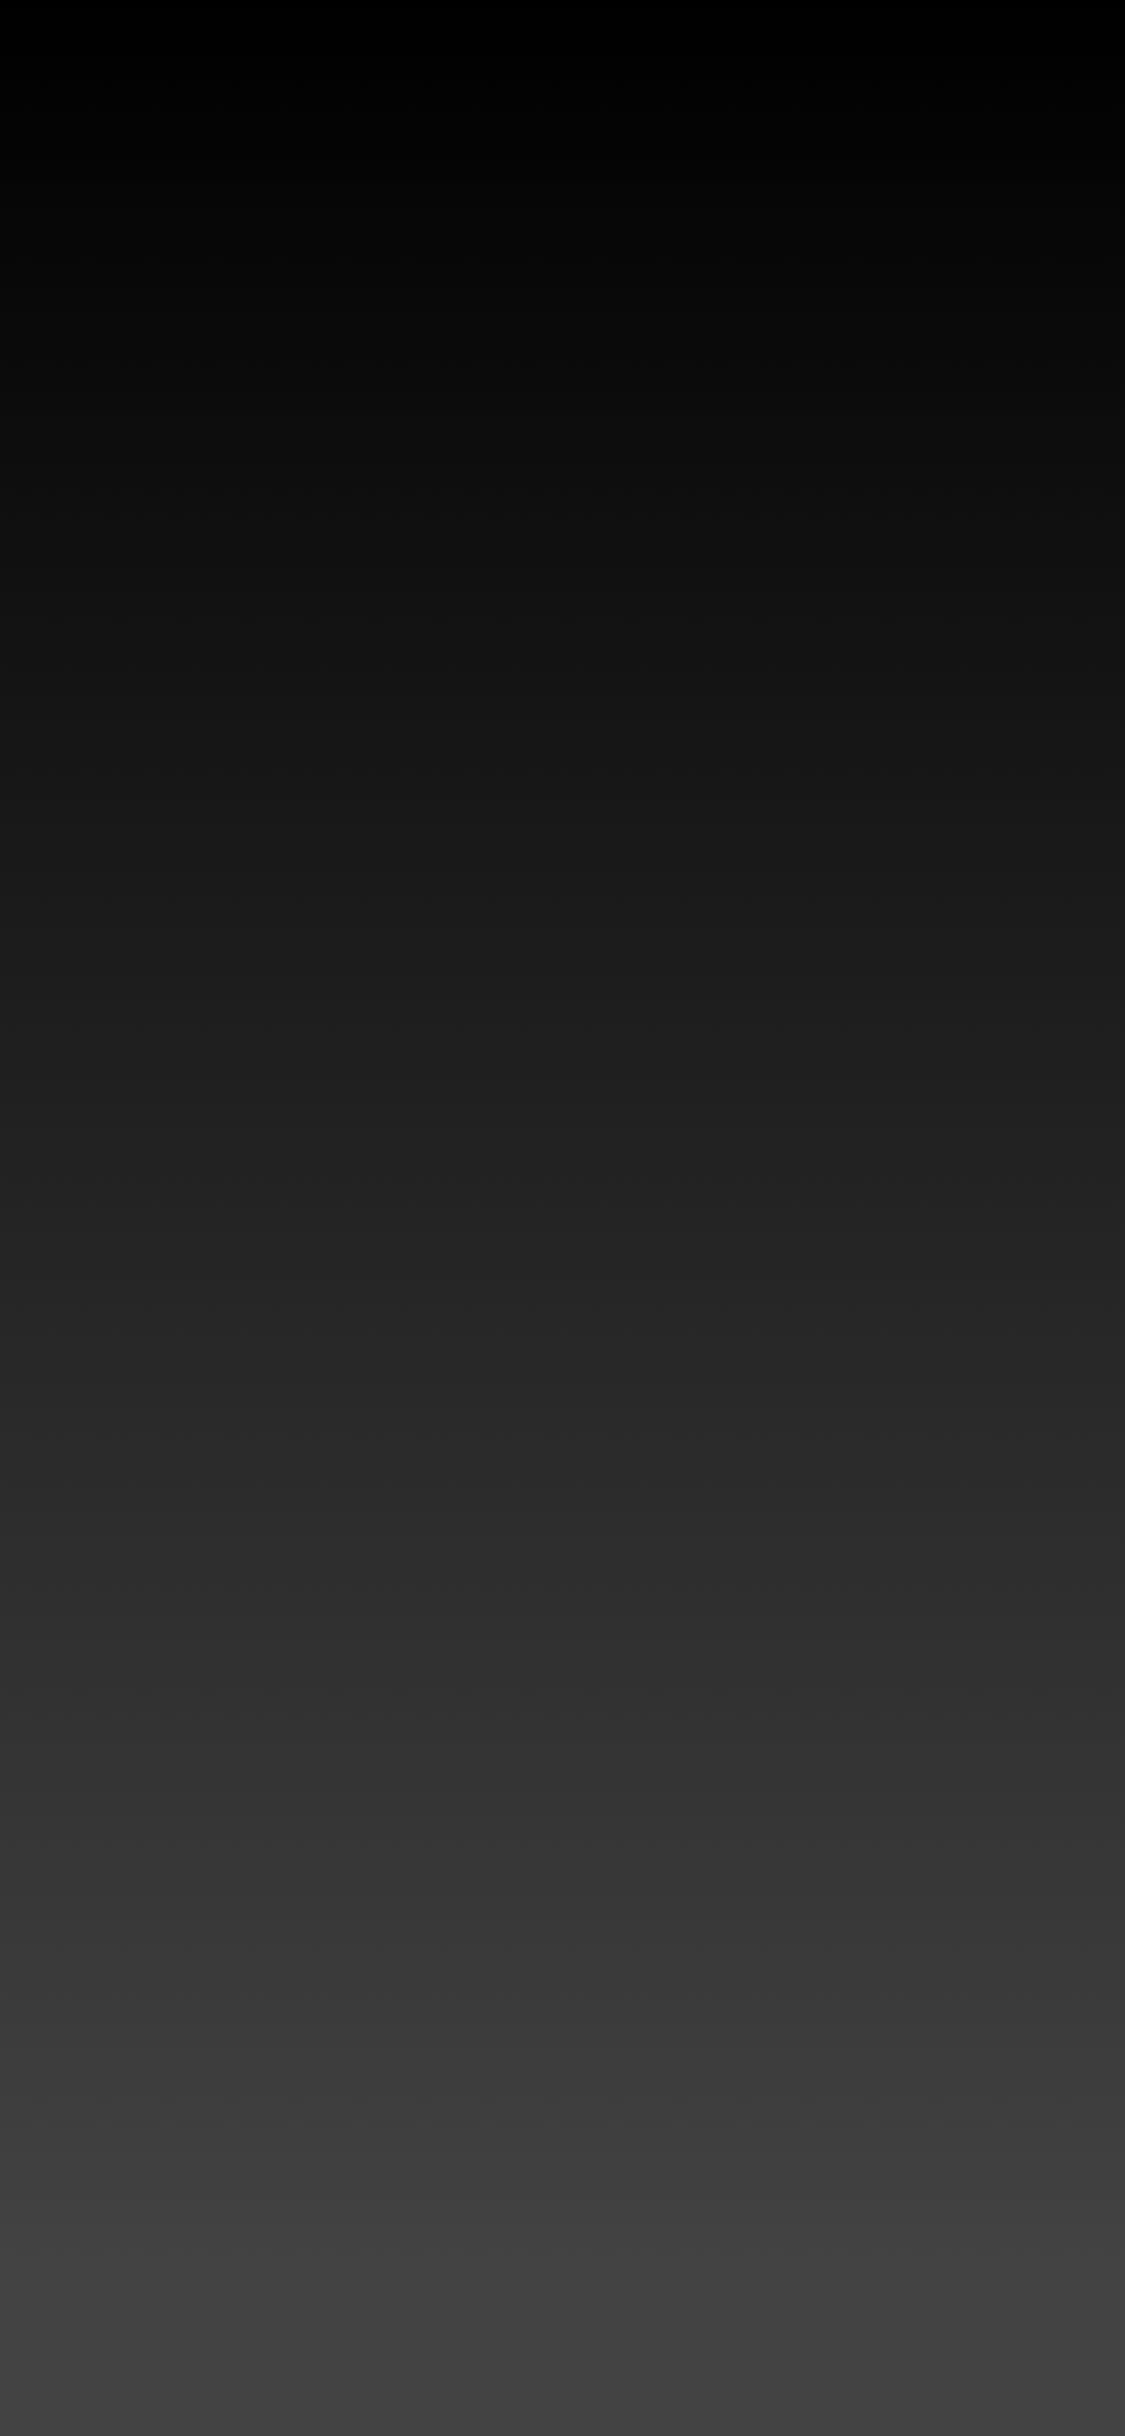 Unduh 67 Iphone X Black Wallpaper Screenshot Terbaru - Posts.id